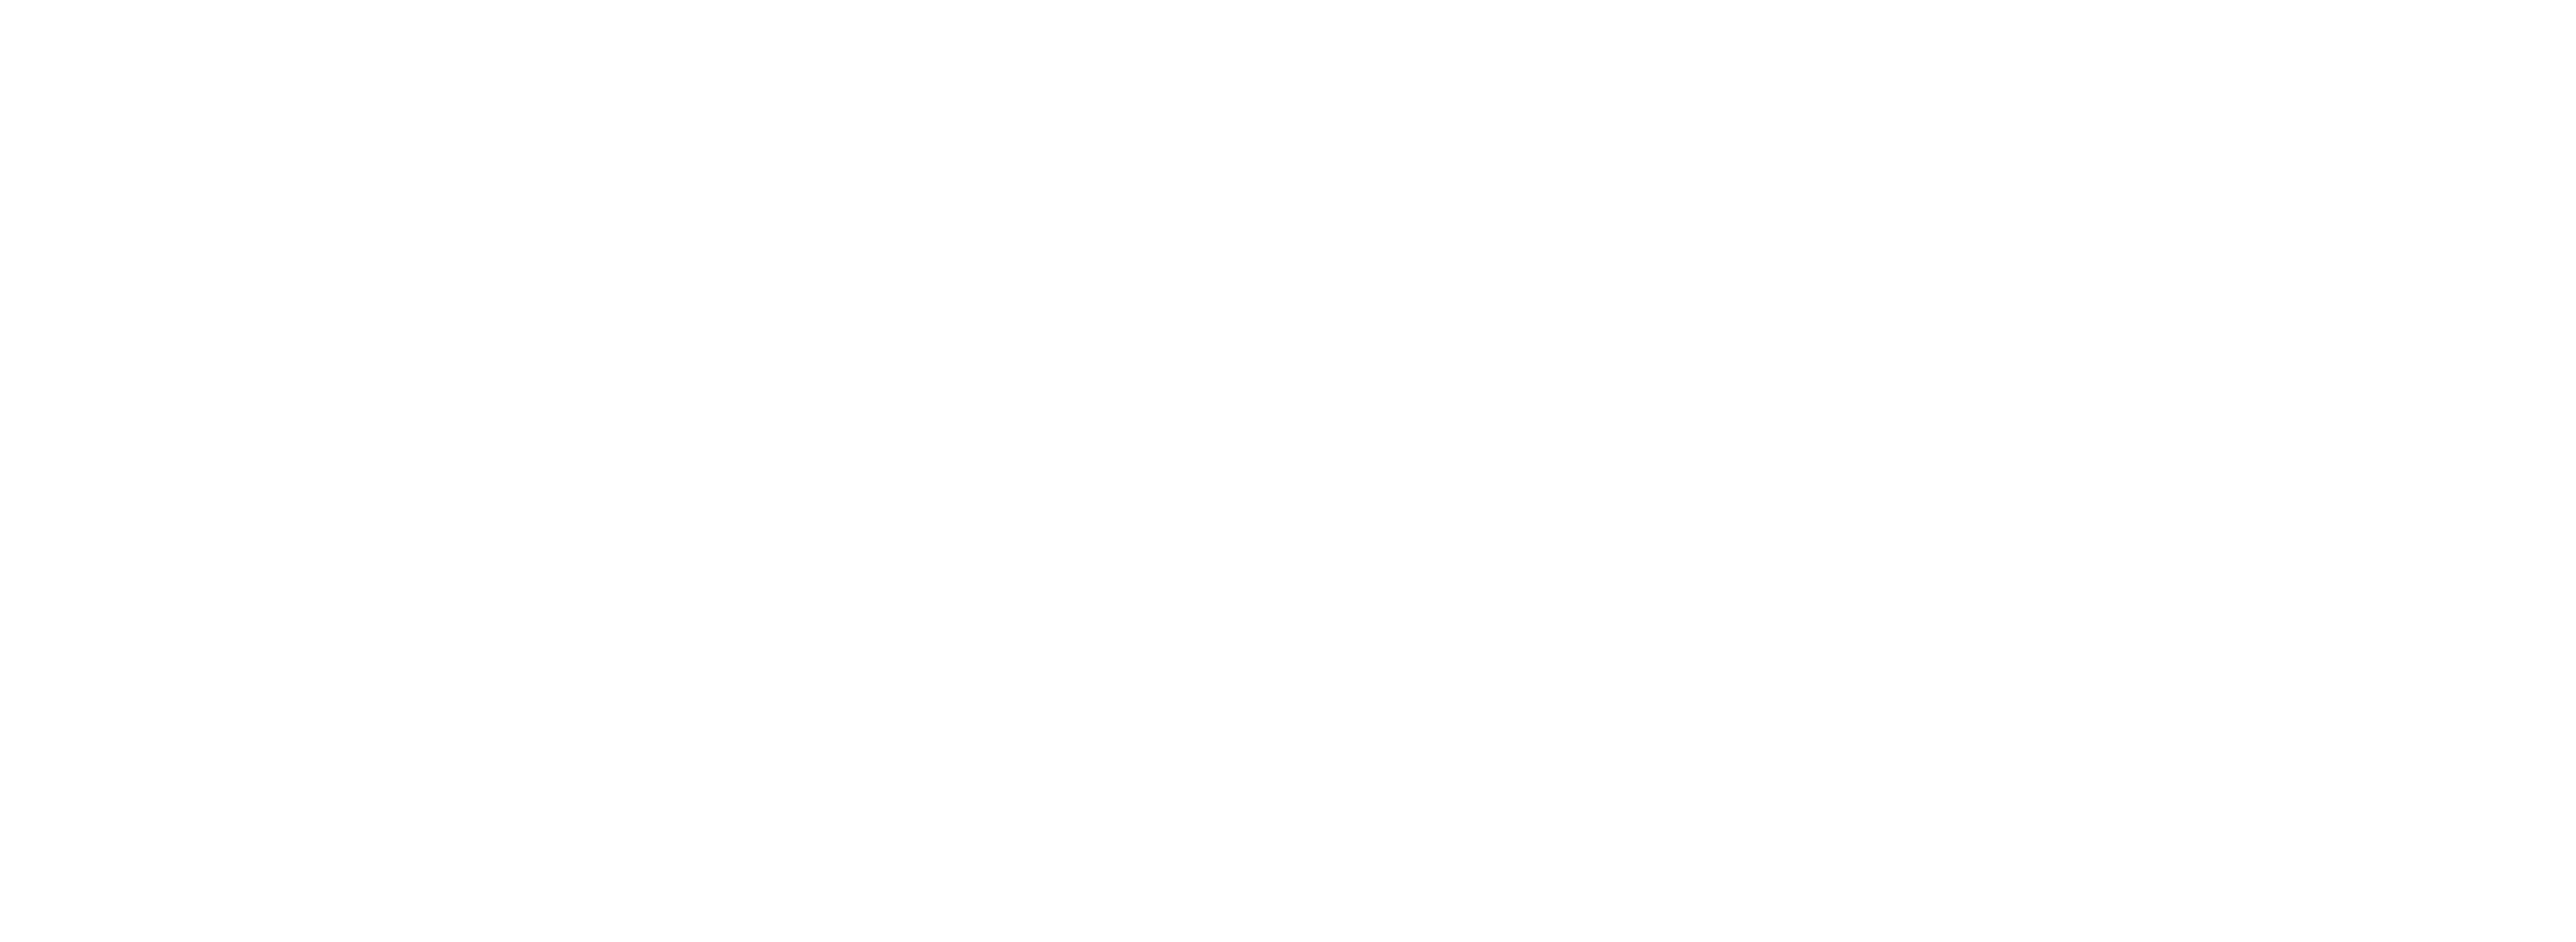 marcdphoto transparent logo just text